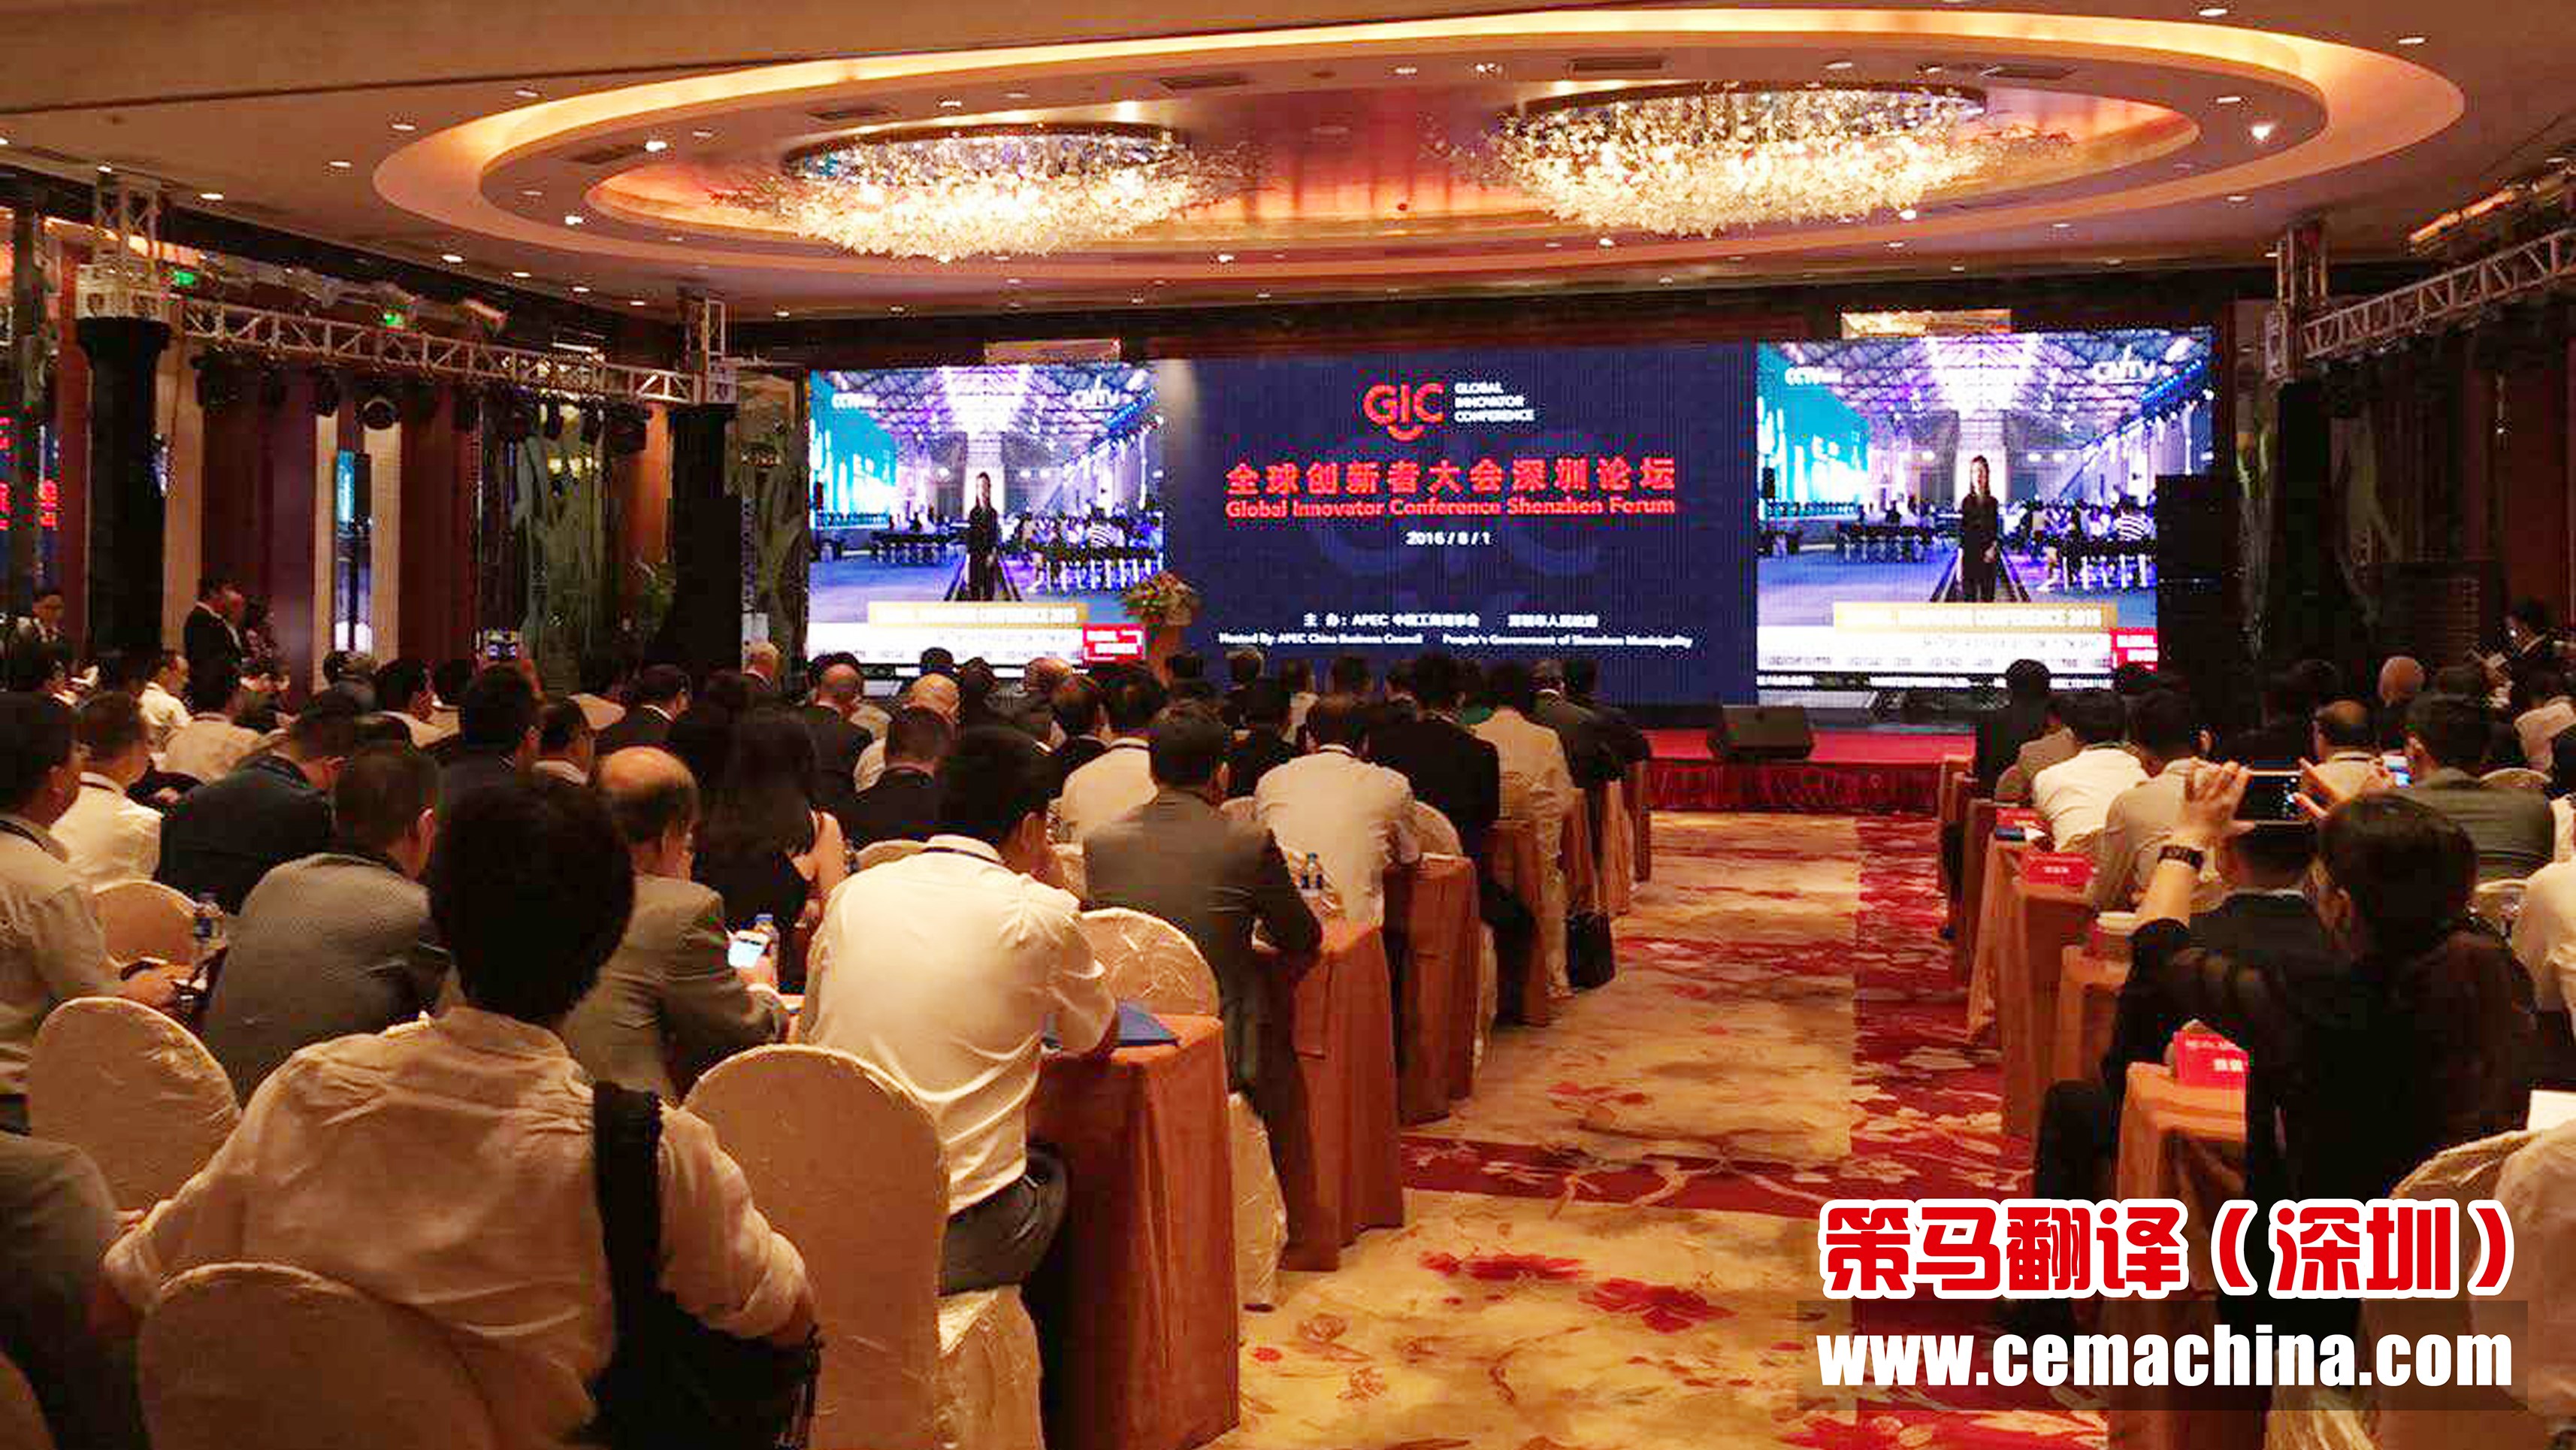 Grouphorse provides interpreting services for Global Innovator Conference Shenzhen Forum